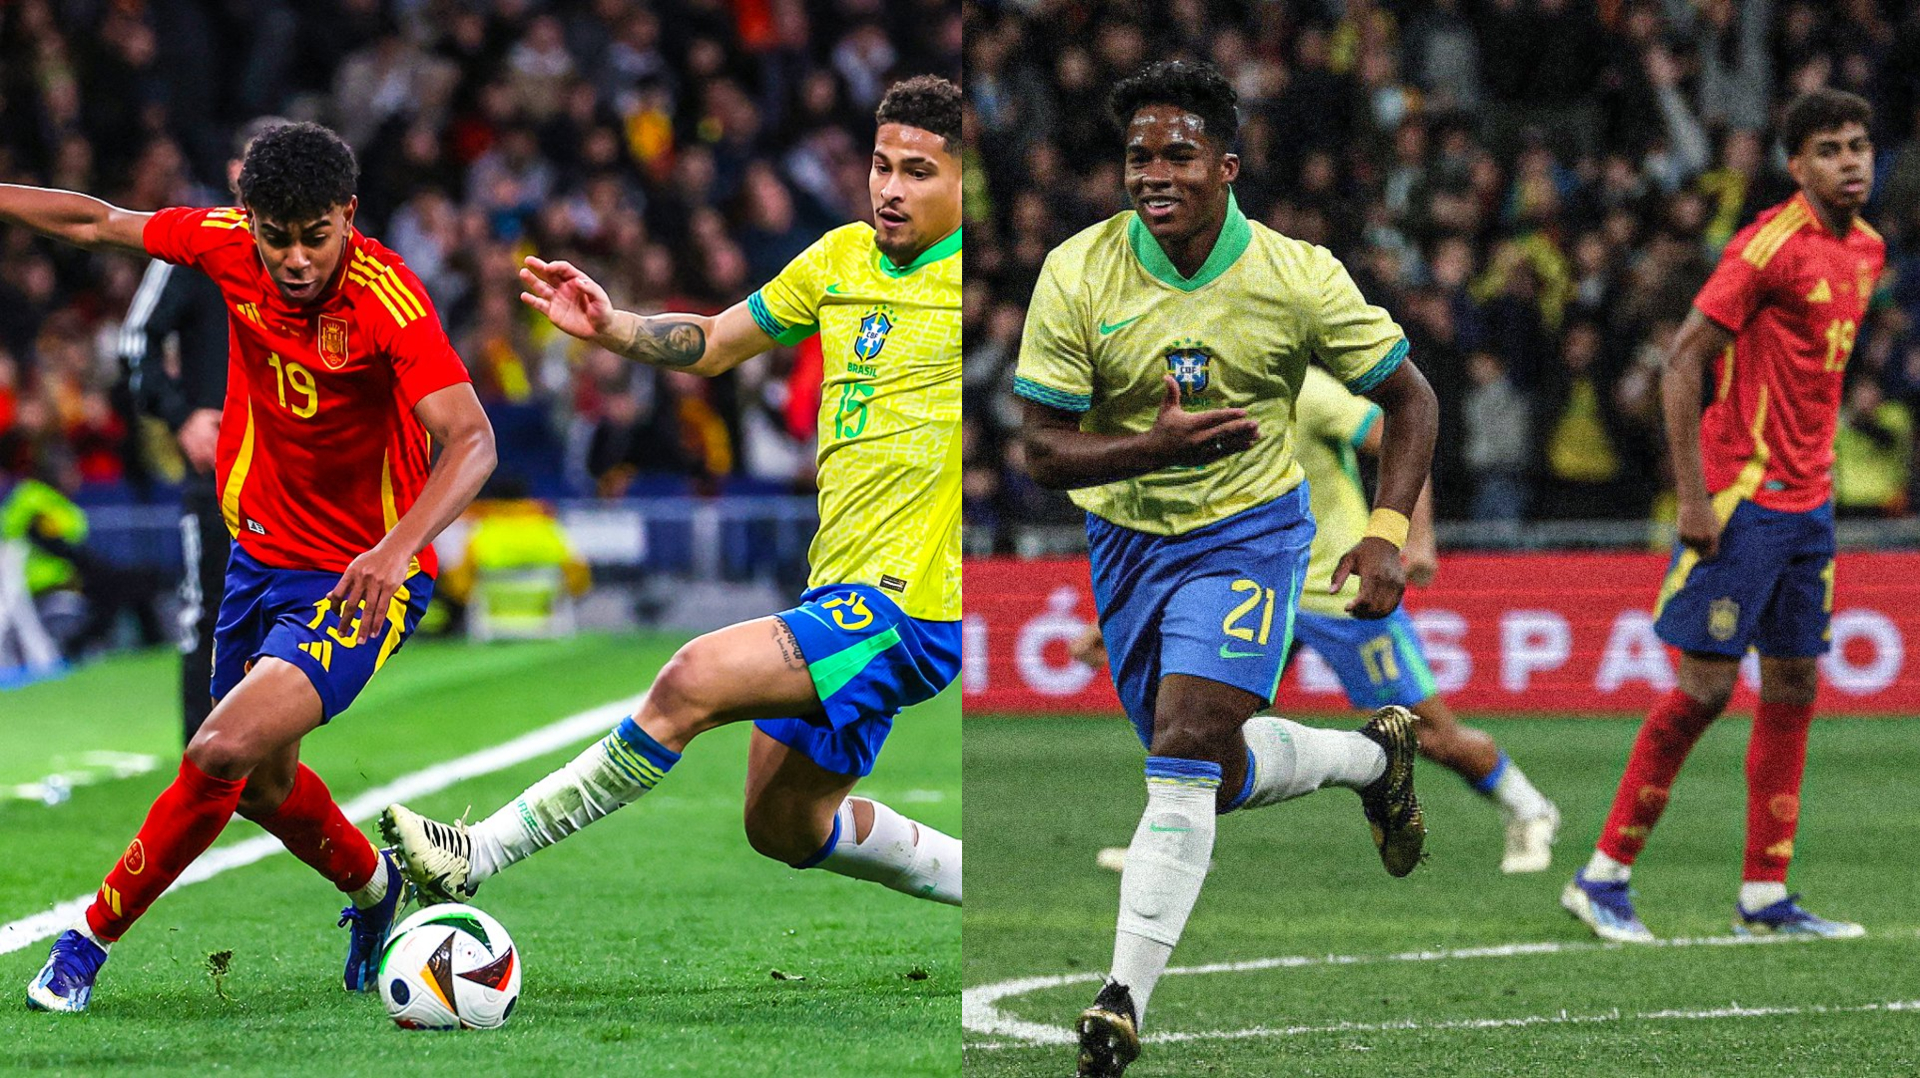 Like Ronaldinho, Lamine is applauded at Bernabeu and Endrick shines for Brazil